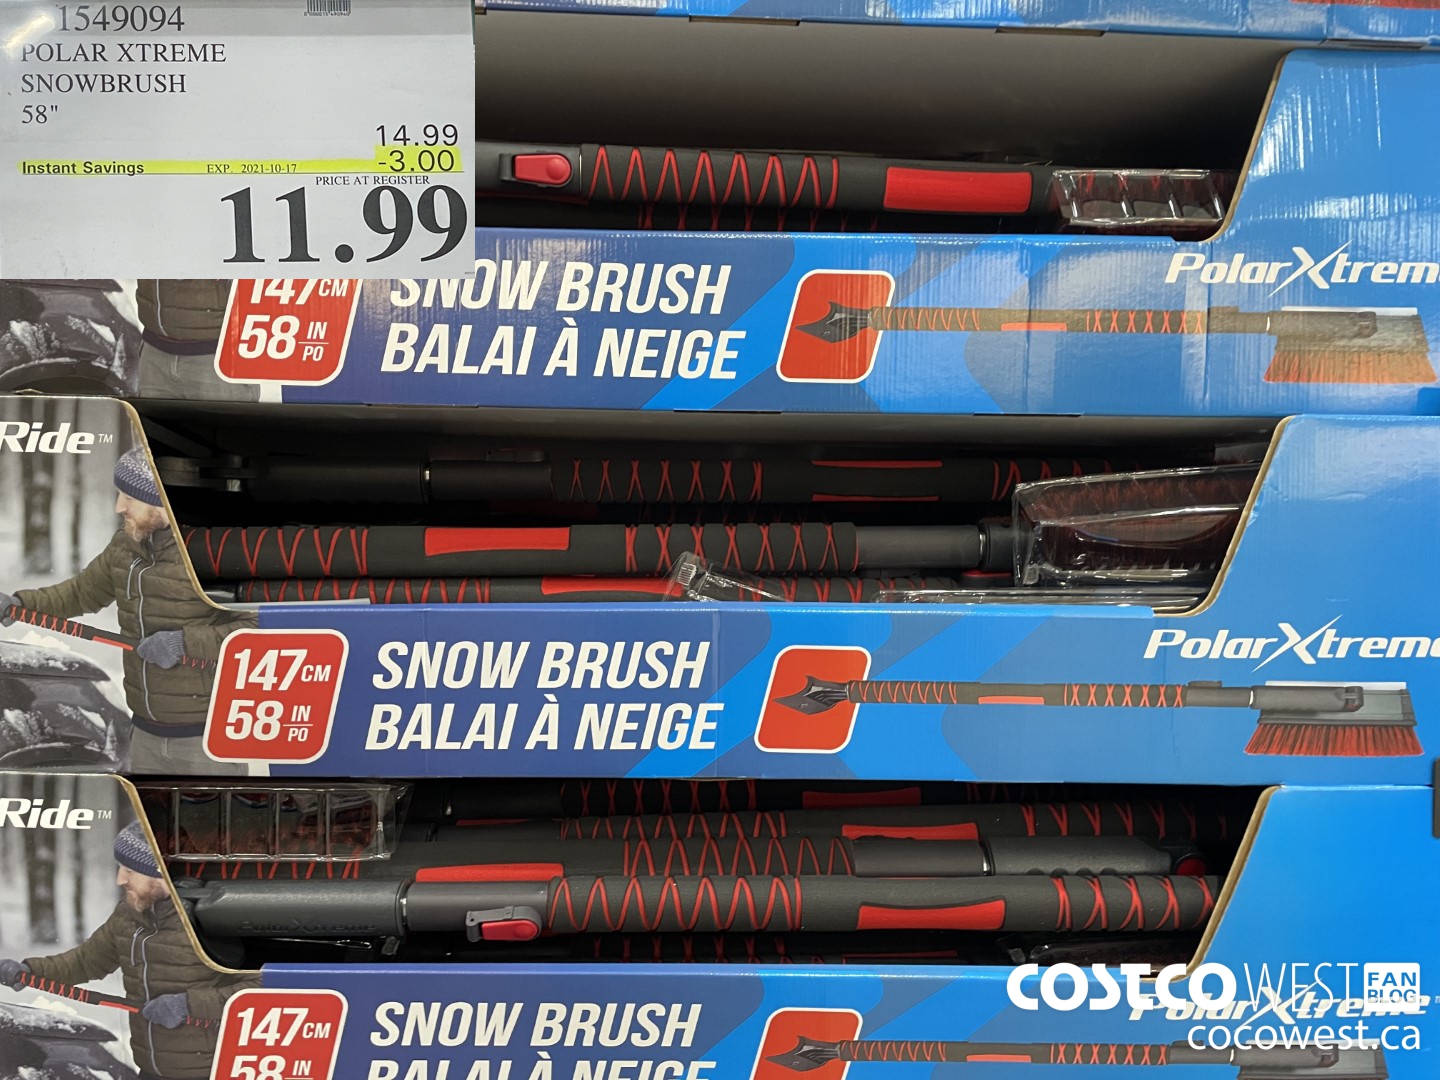 Polar Extreme 58” Snowbrush 2-pack 